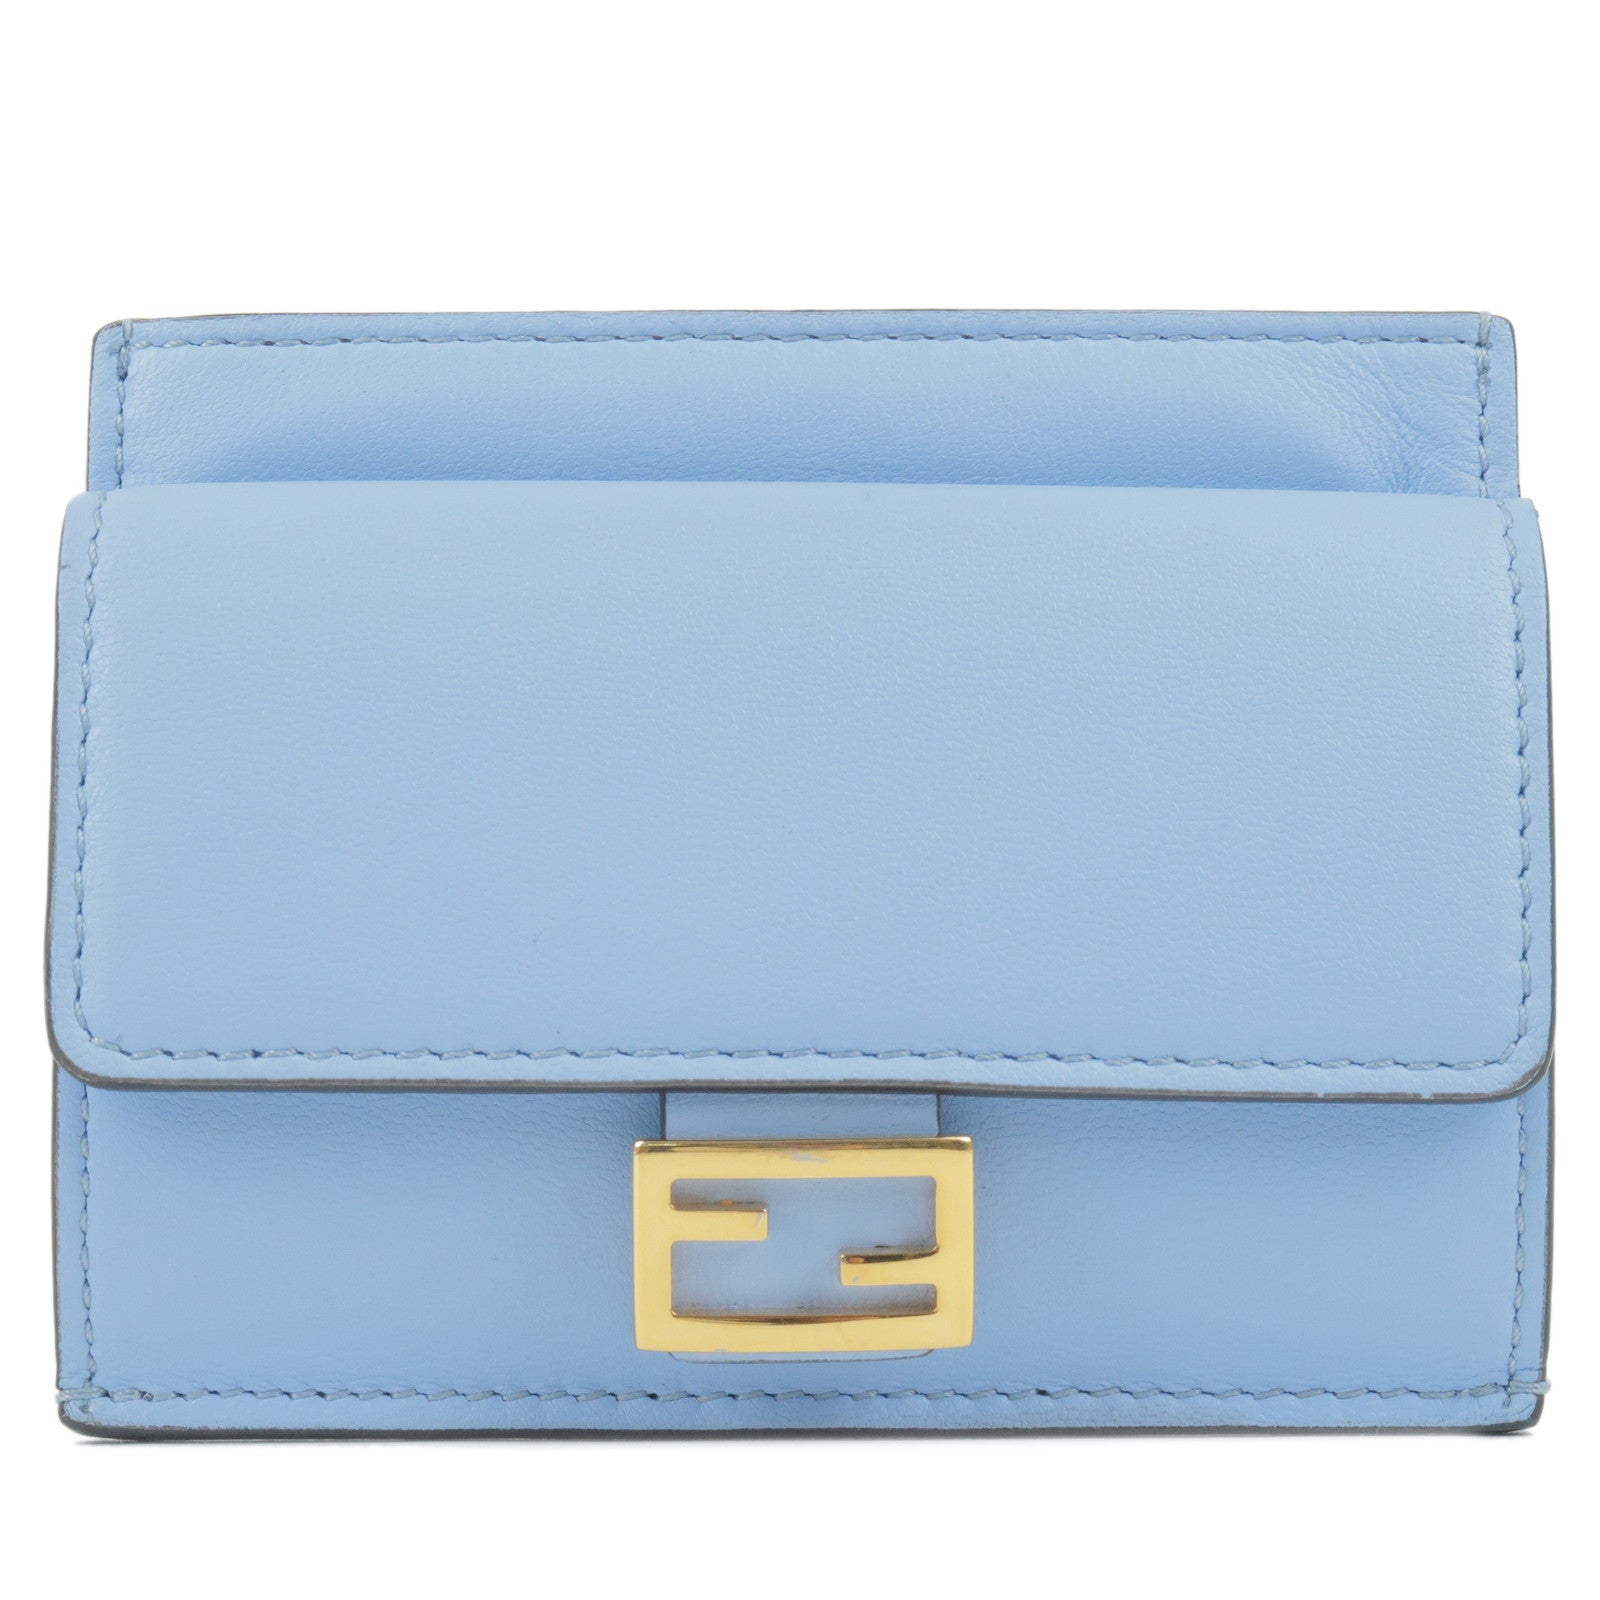 FENDI-Leather-Card-Case-Light-Blue-8M0423